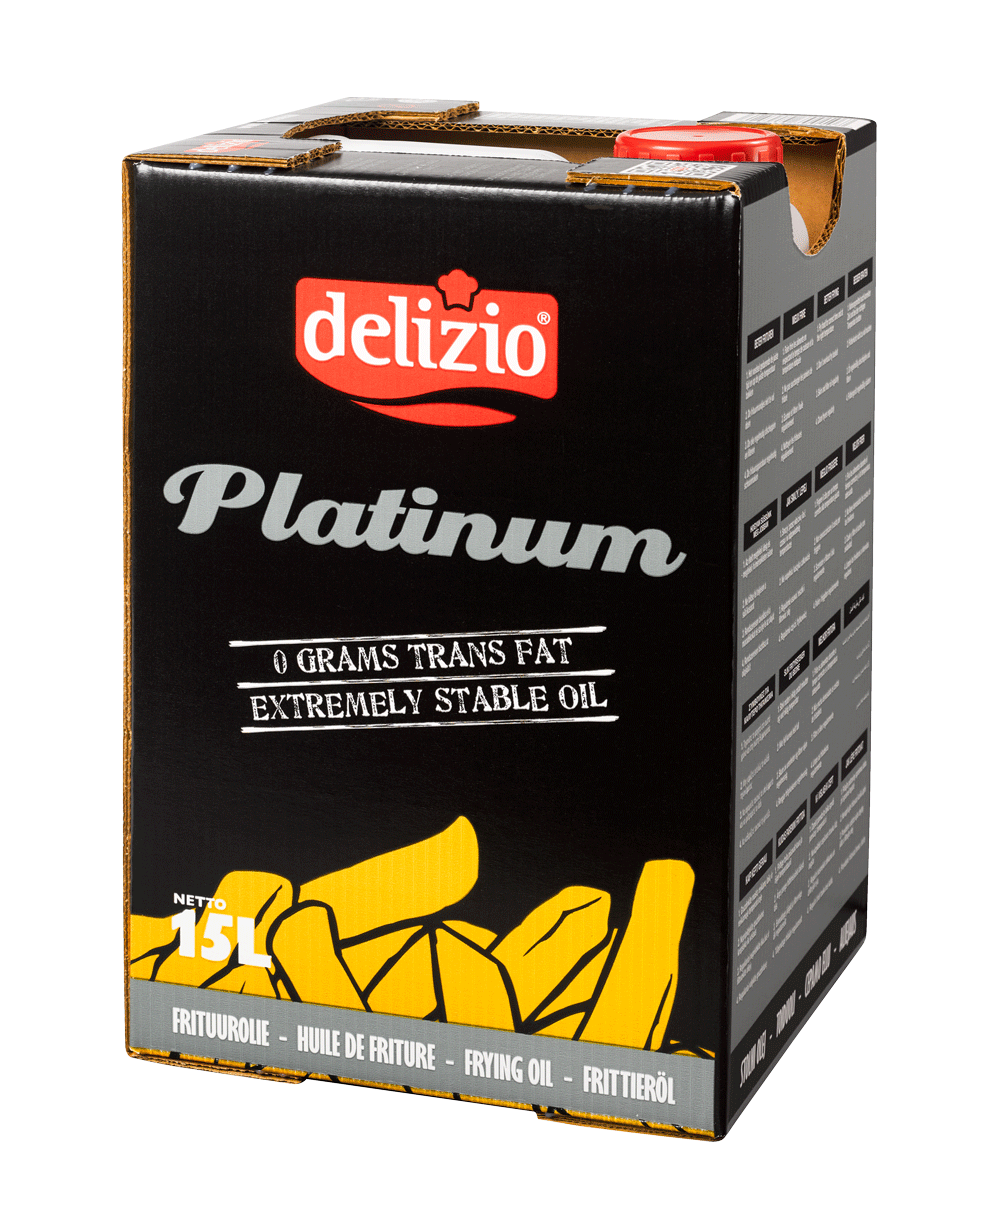 antenne schuld Madeliefje Delizio Platinum 15L frituurolie ringcontainer in grootverpakking Online  Kopen - Nevejan